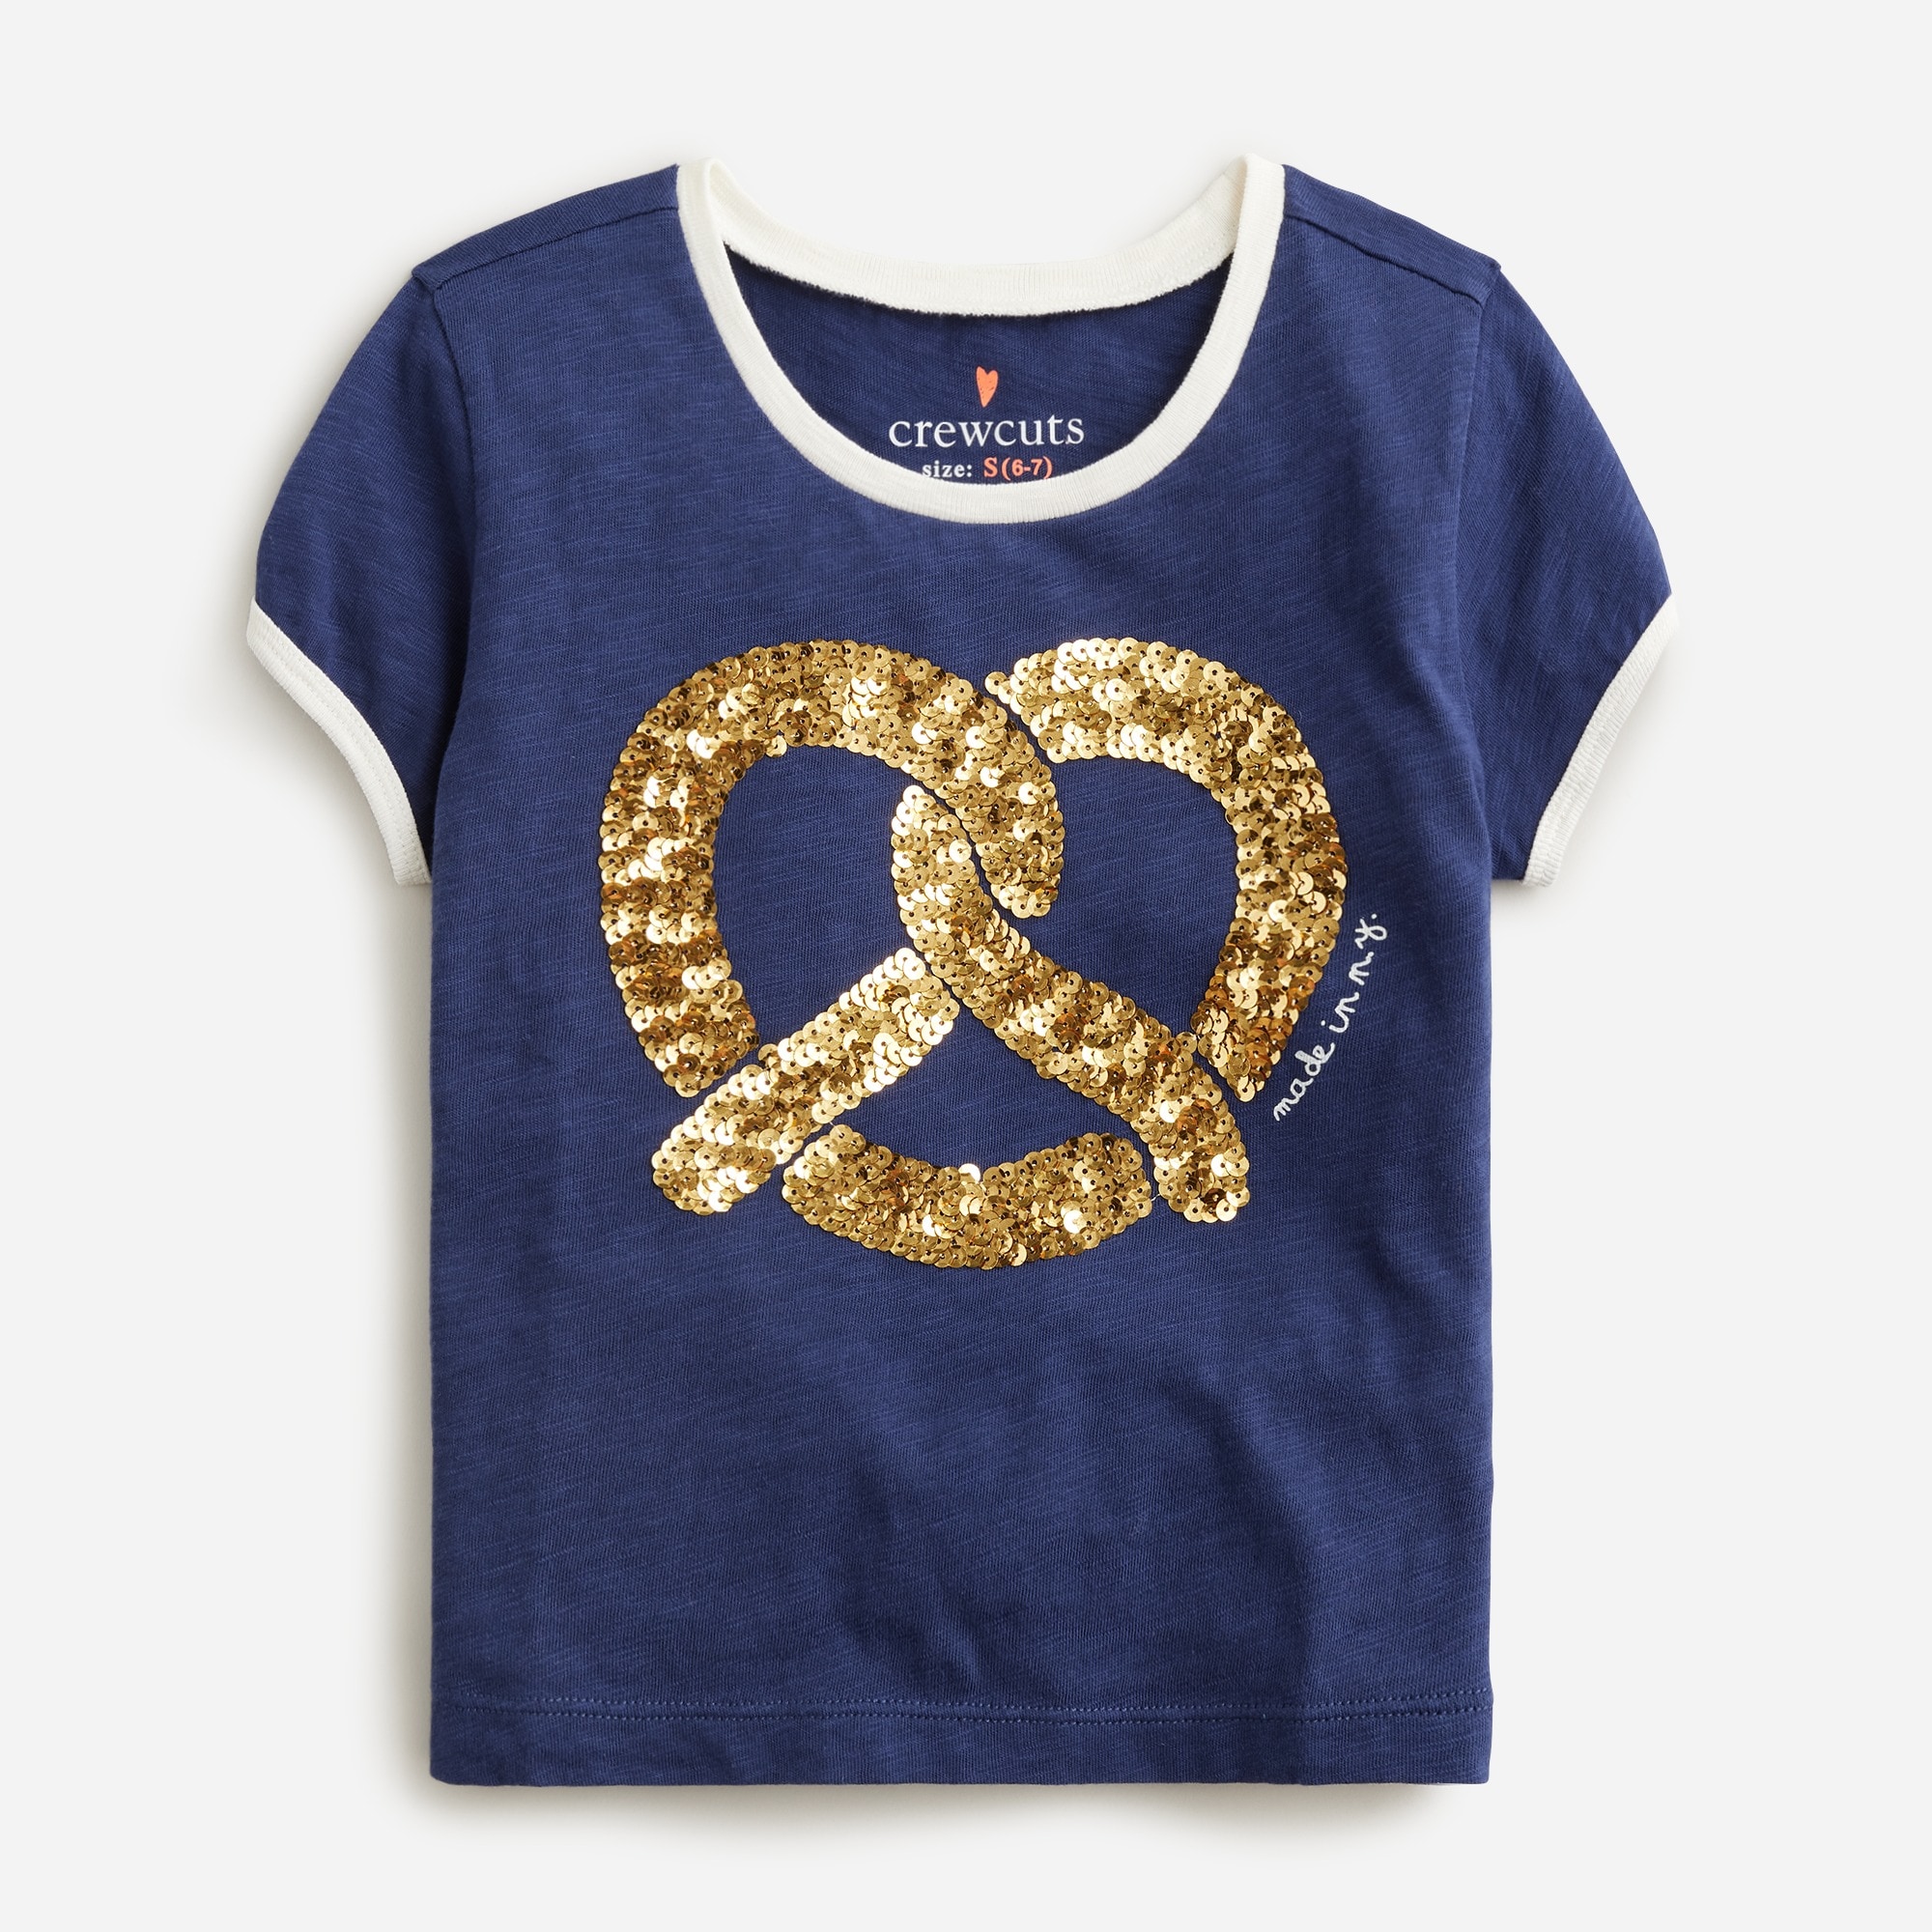  Girls' shrunken glitter pretzel graphic T-shirt